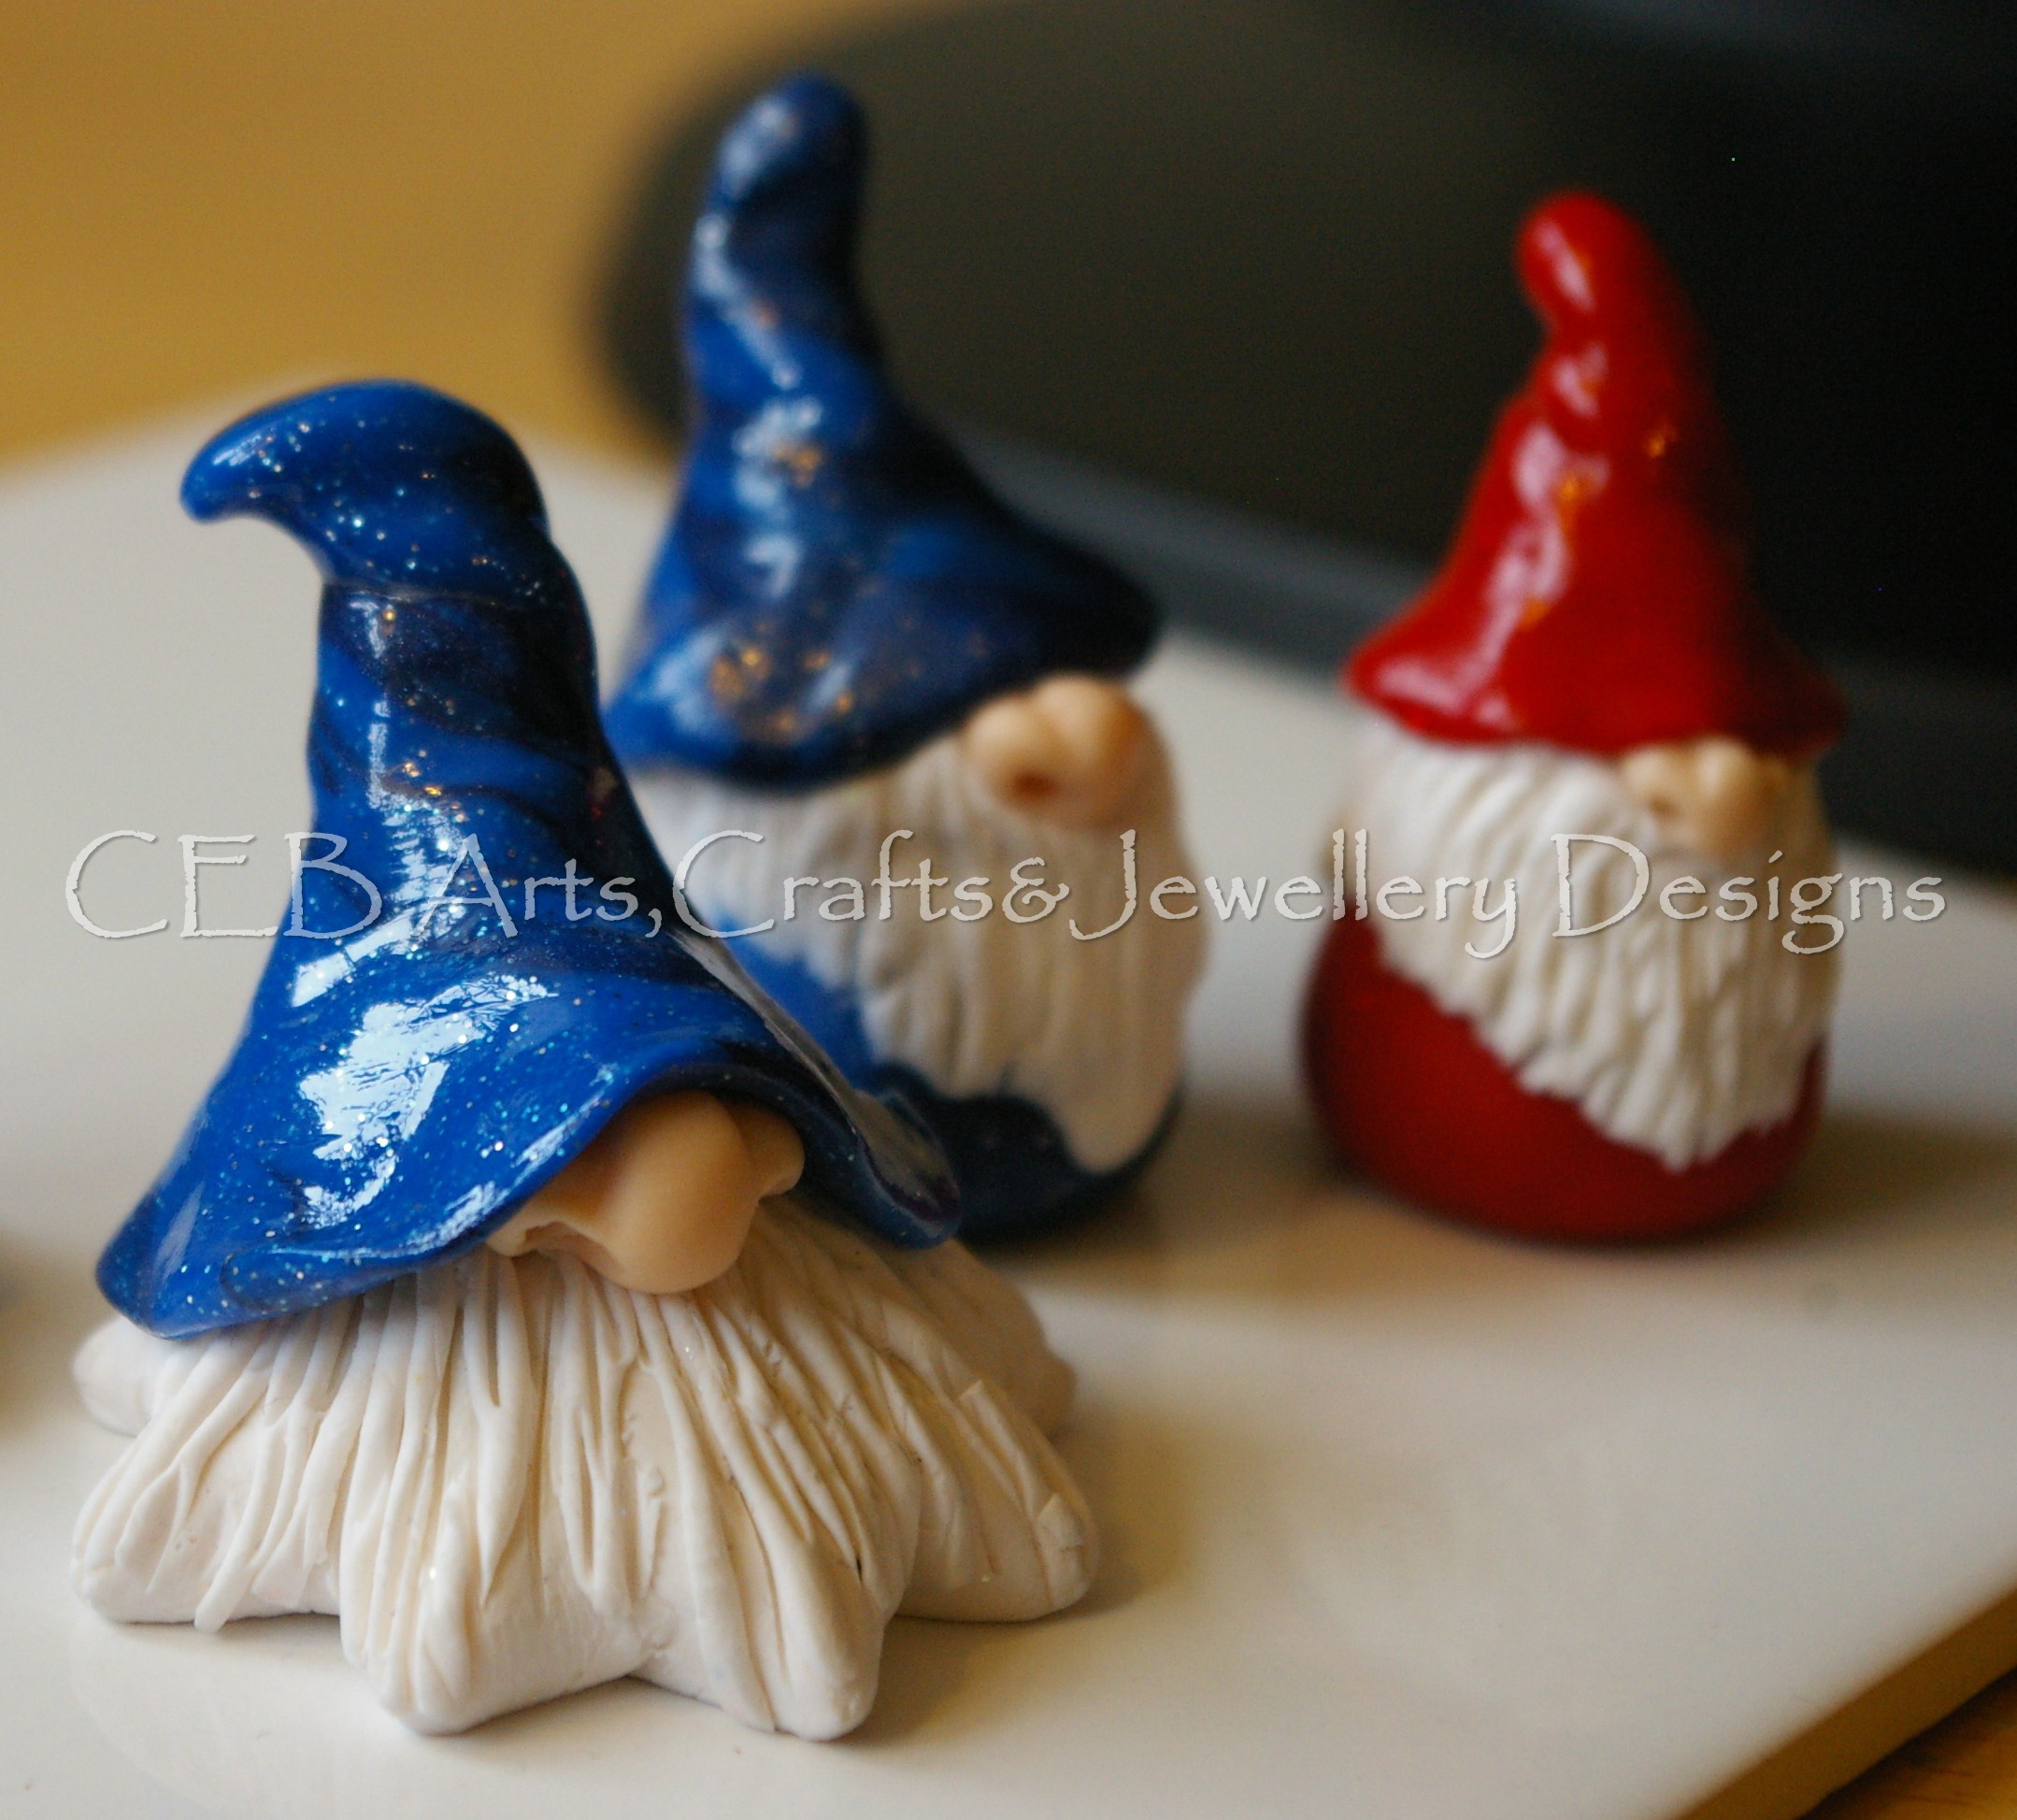 My Handmade Polymer Clay Gnomes | cebartscraftsandjewellerydesigns